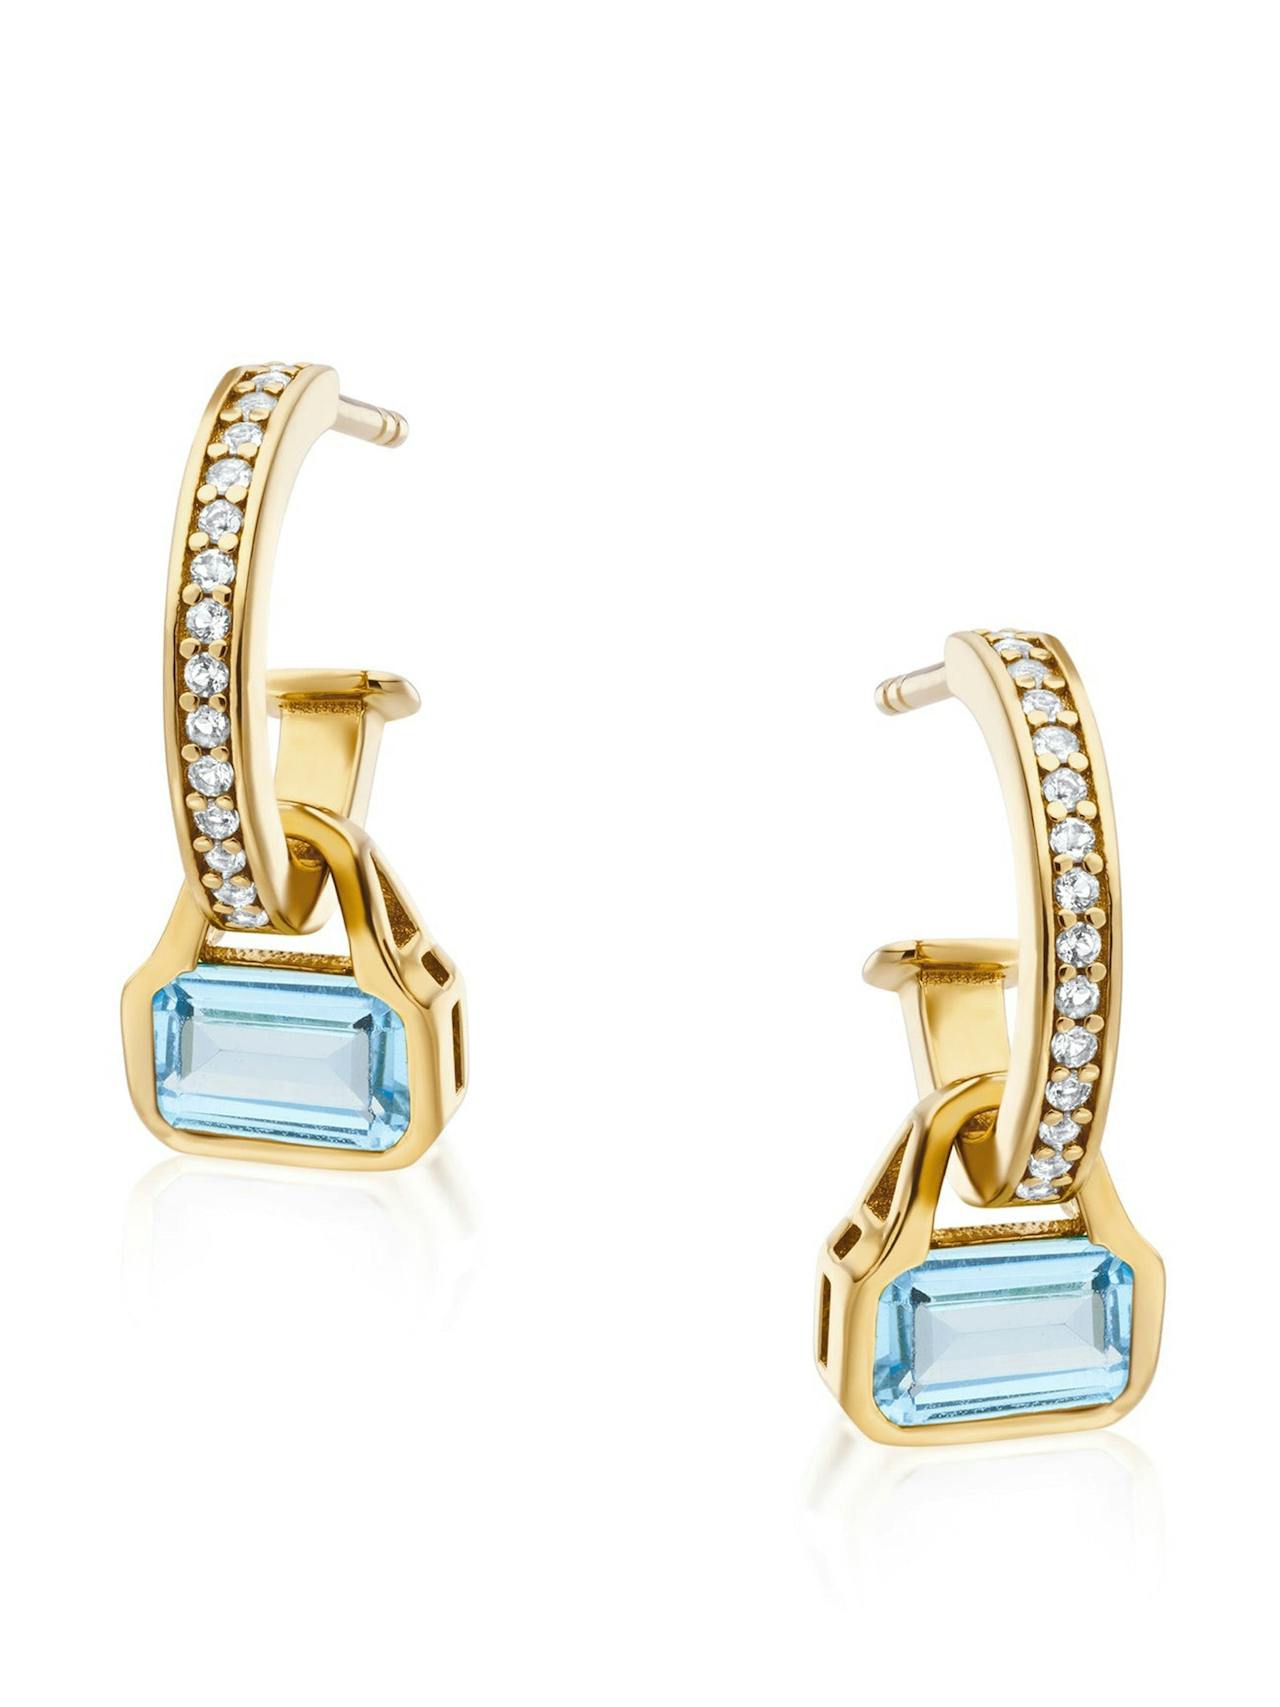 Swiss blue Topaz charms on white topaz hoop earrings